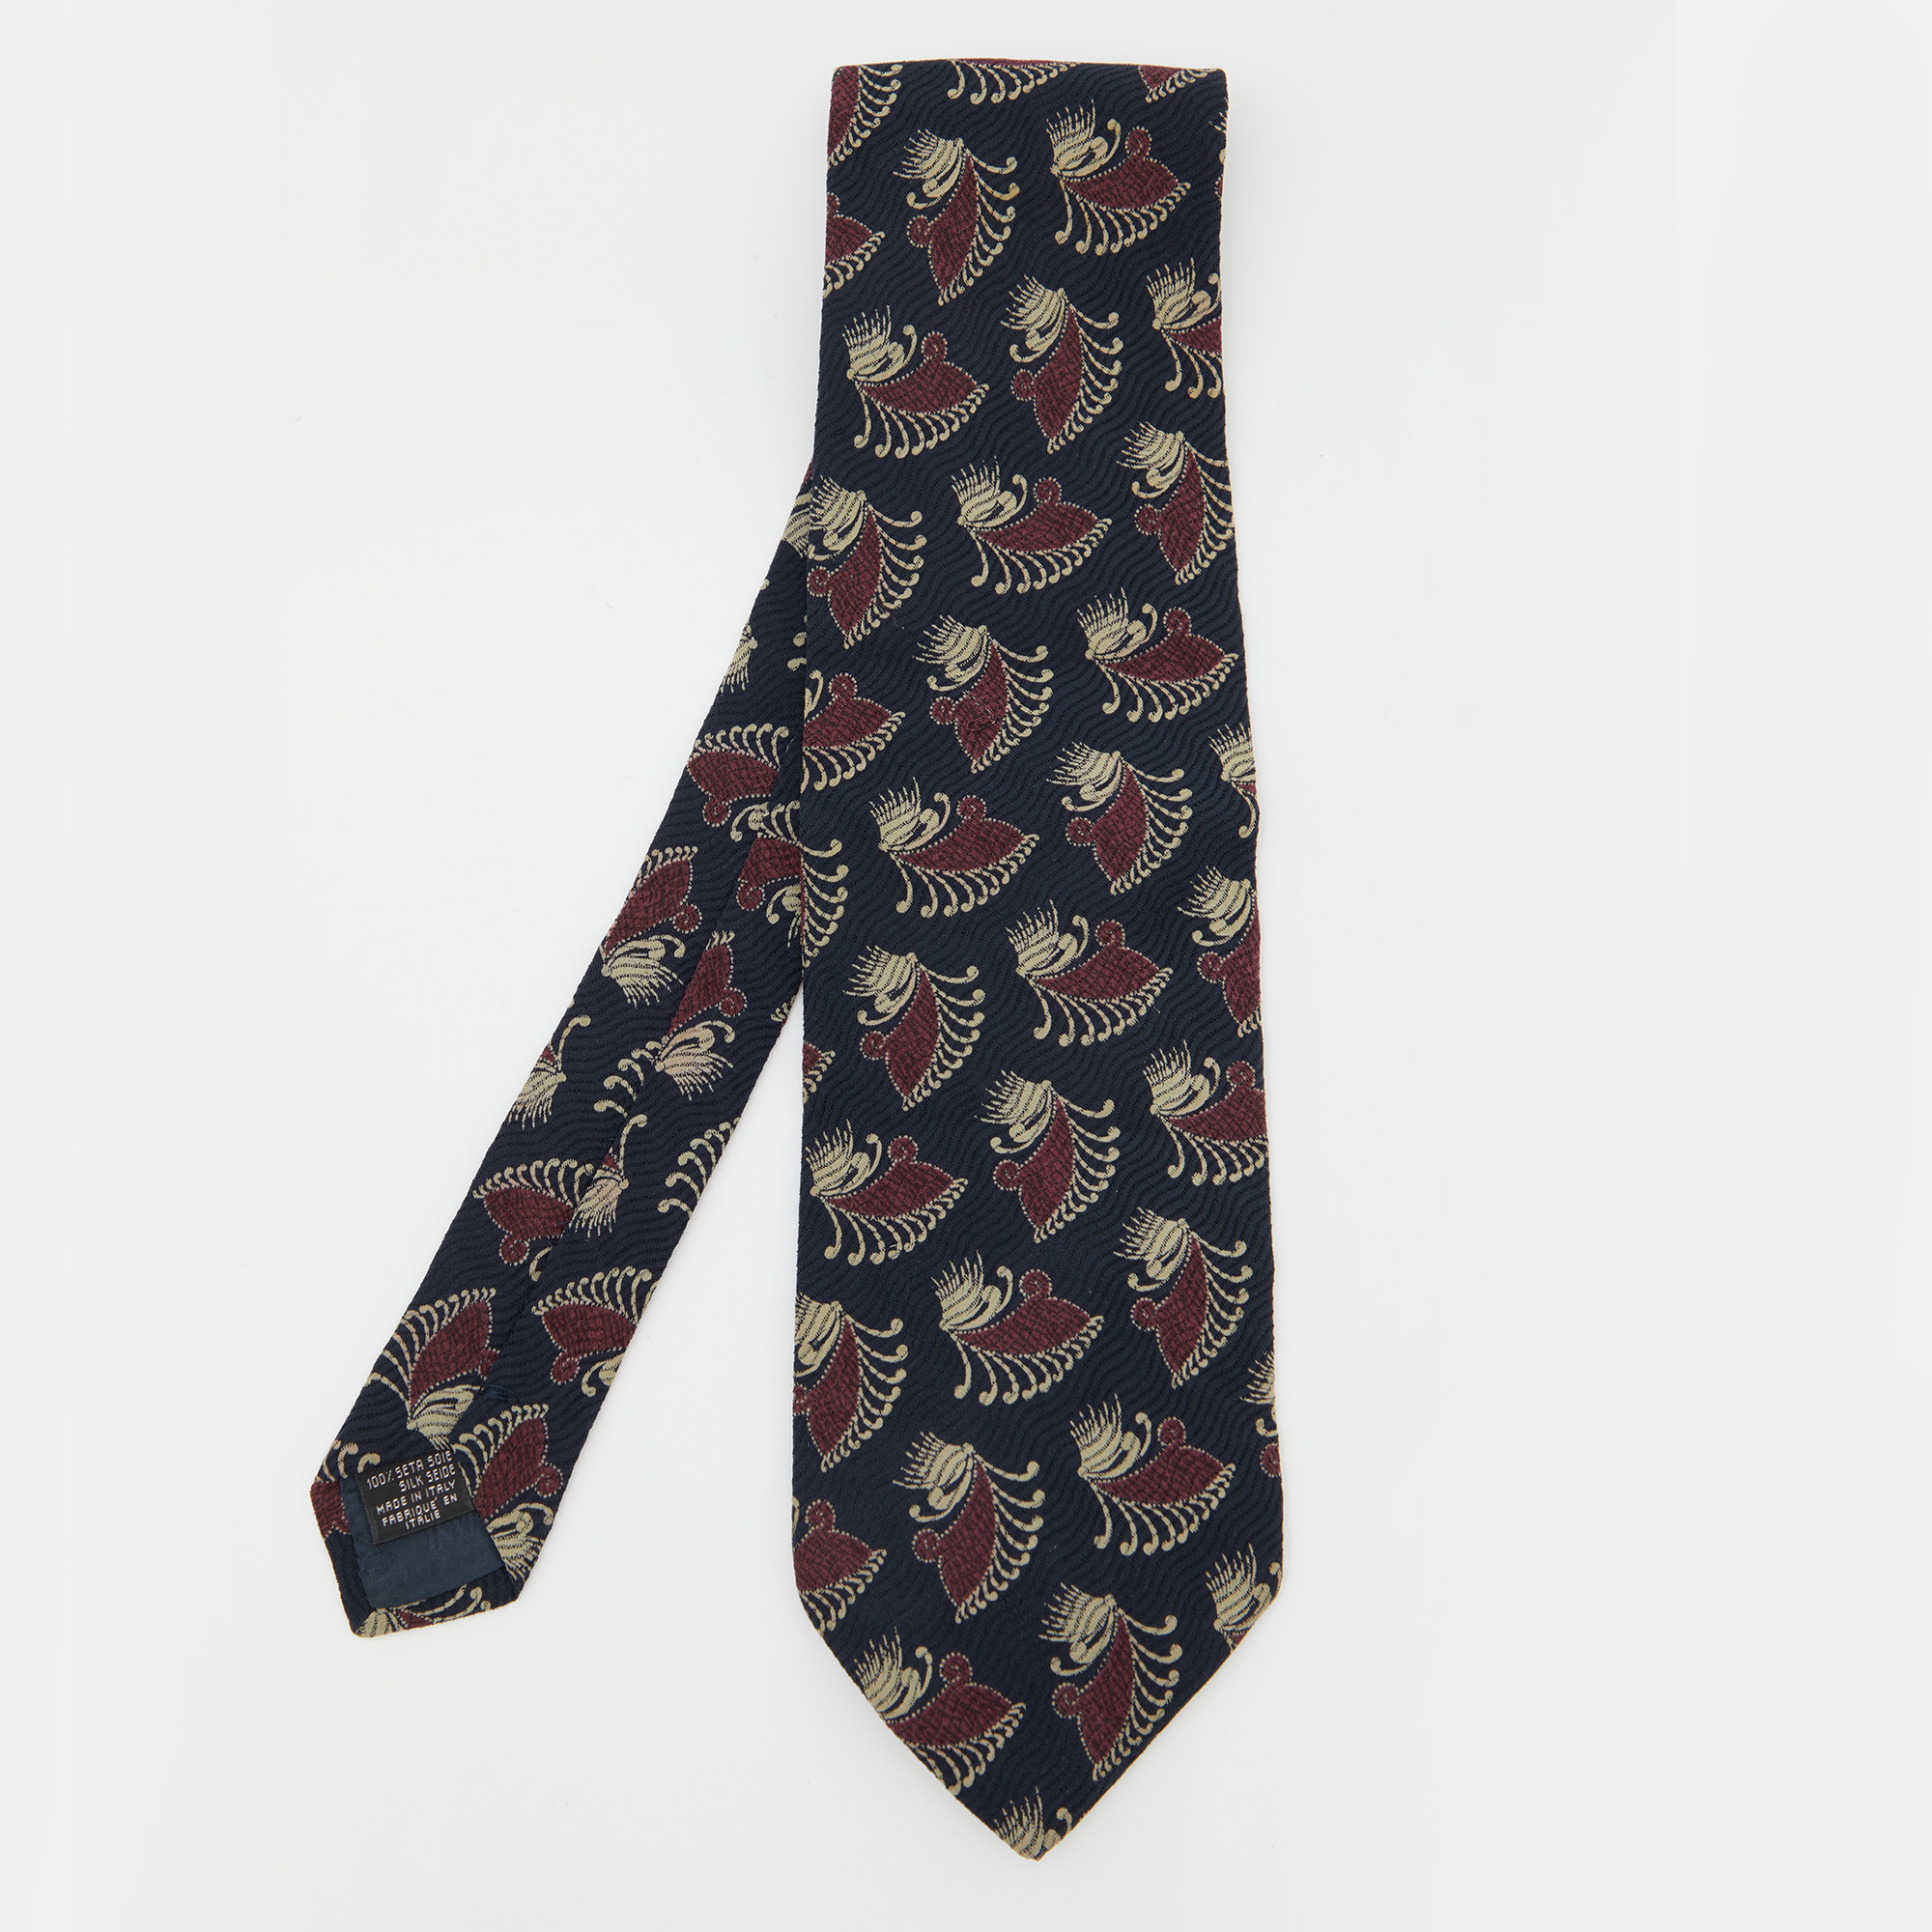 Giorgio Armani Cravatte Black Printed Textured Silk Tie